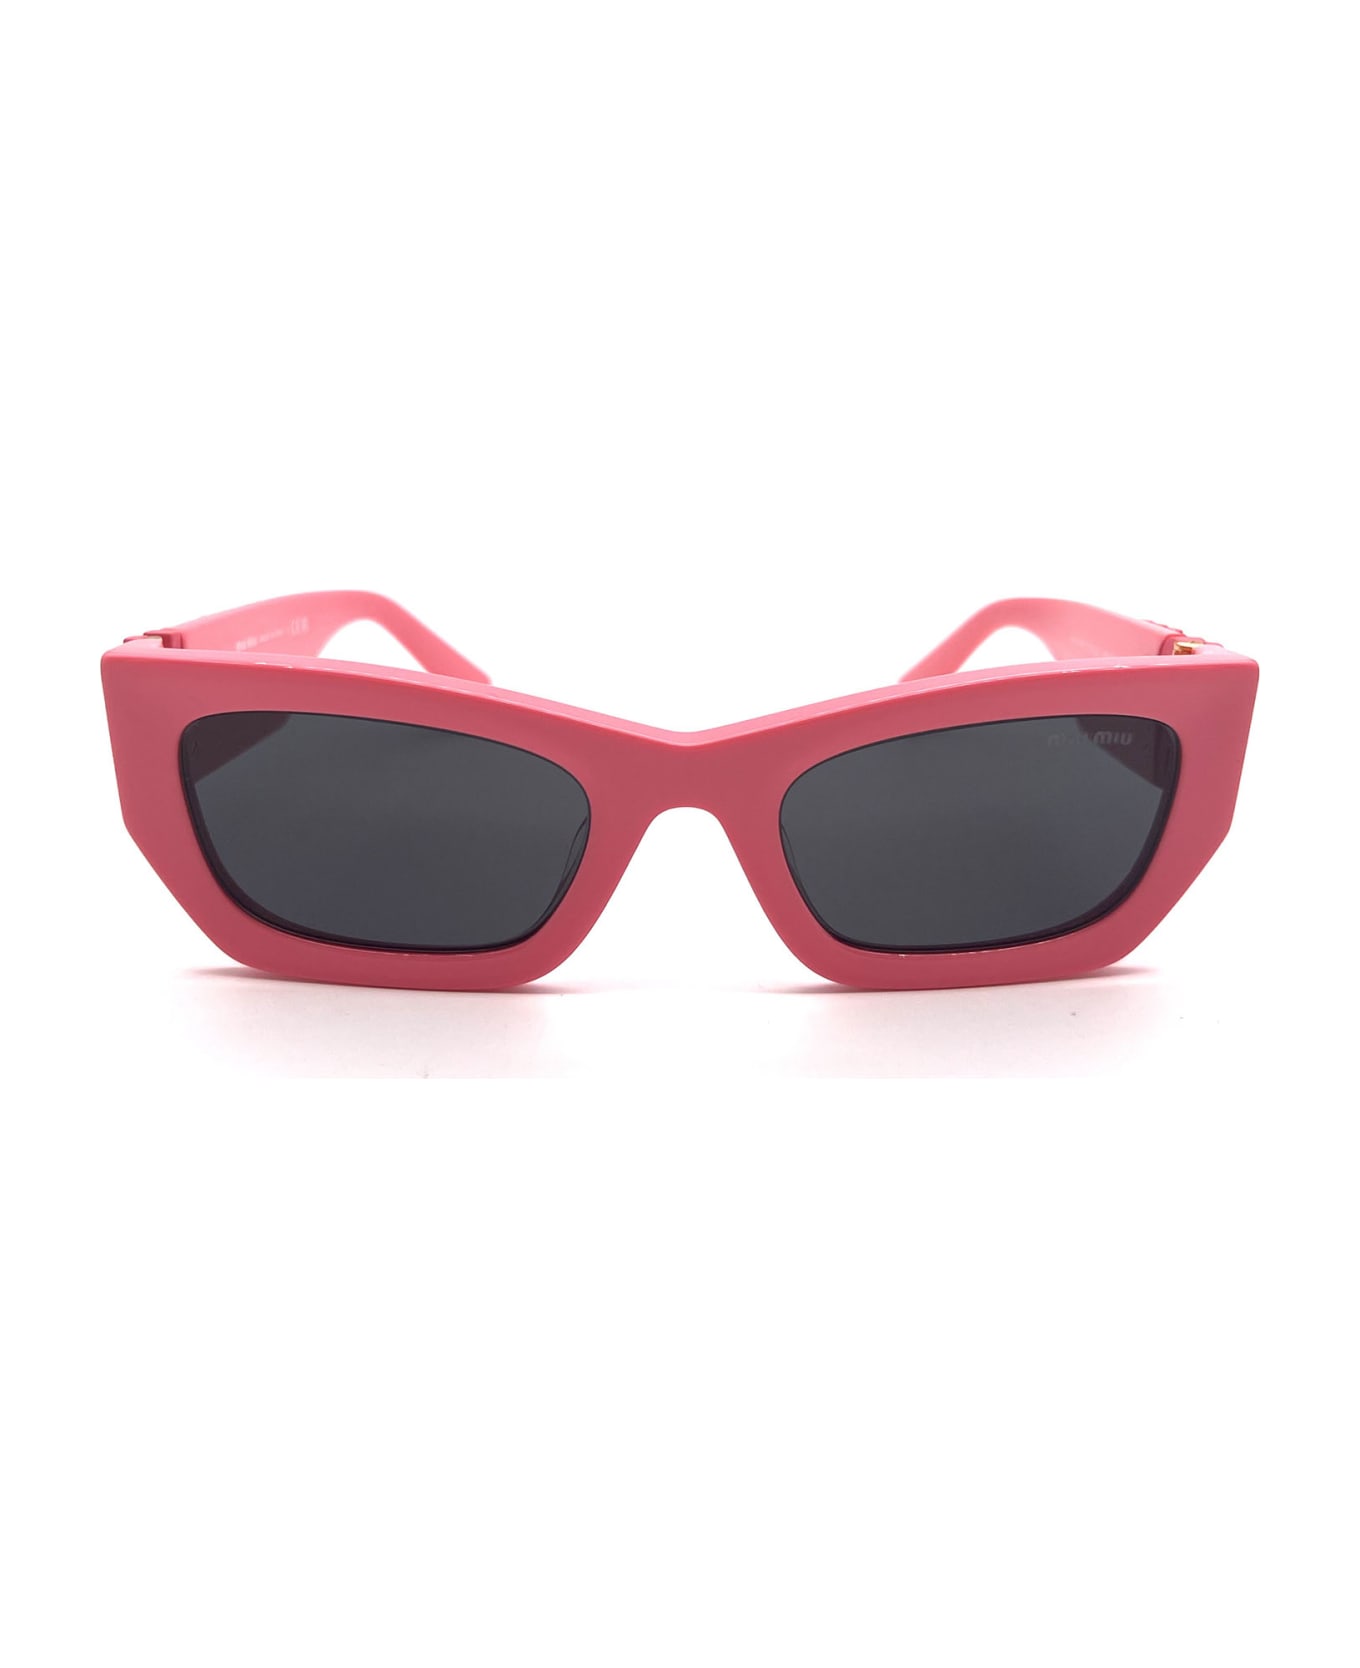 Miu Miu Eyewear 09WS SOLE Sunglasses